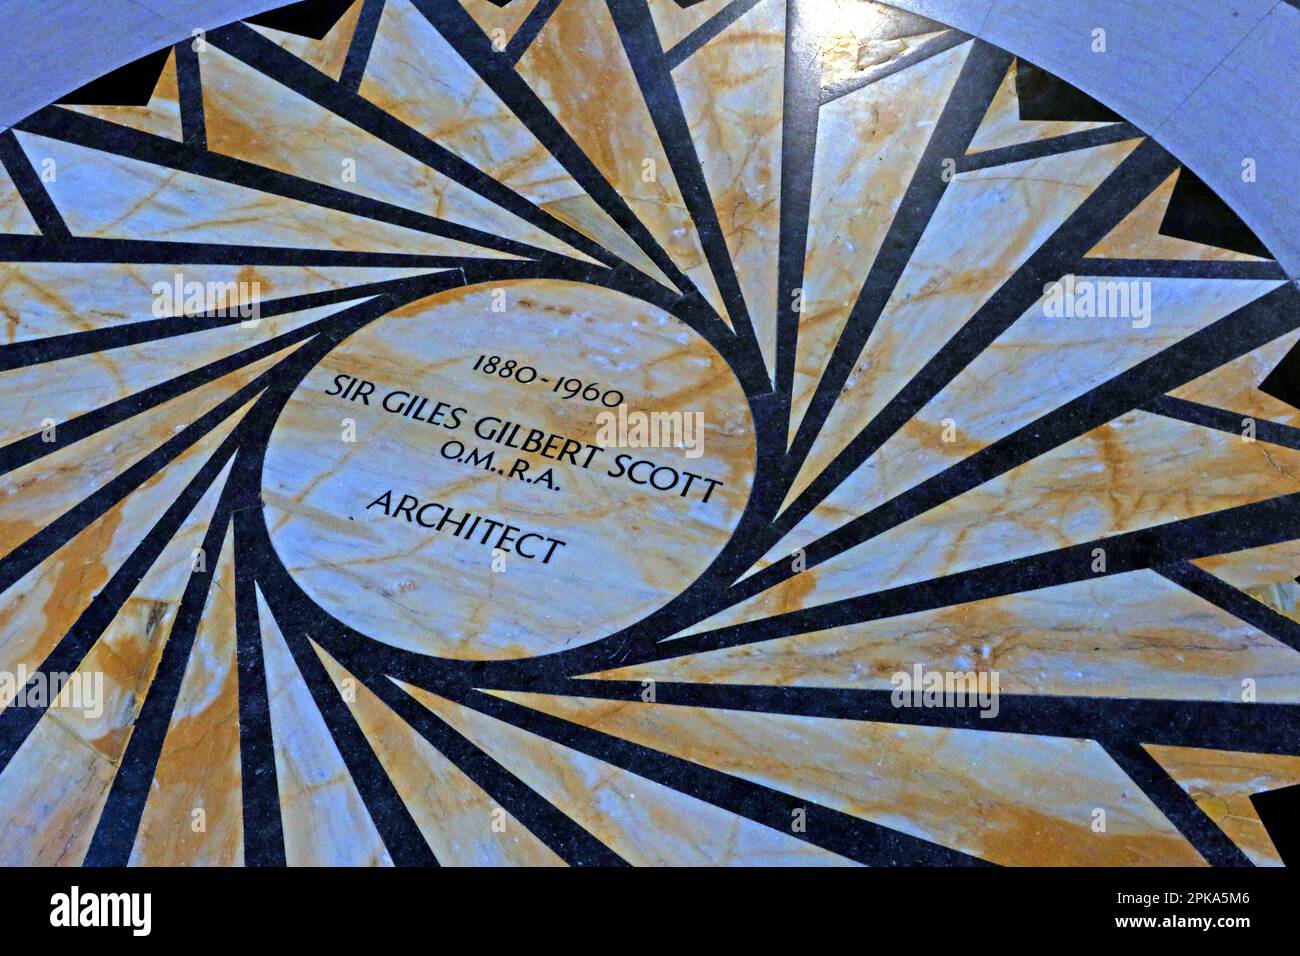 Sir Giles Gilbert Scott  OM RA FRIBA, 1880-1960, British architect, circular mosaic on floor of Liverpool Anglican Cathedral, Merseyside, UK, L1 7AZ Stock Photo